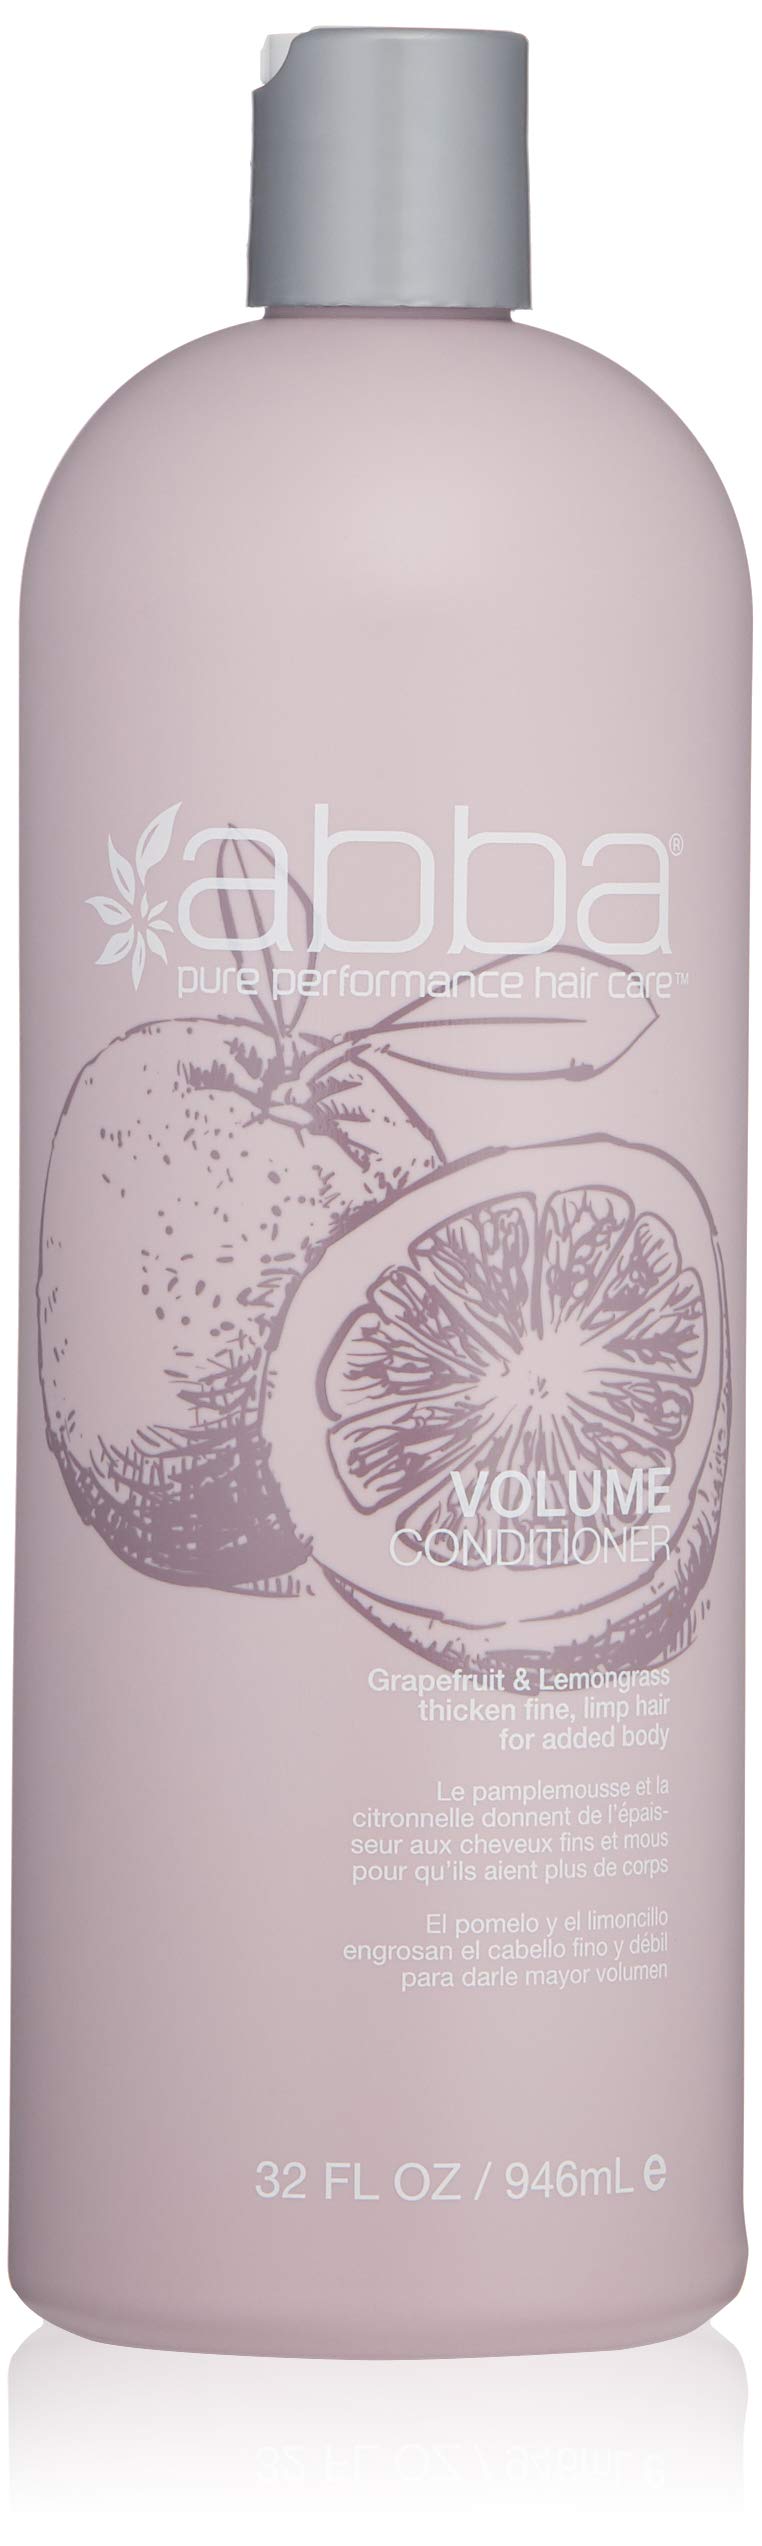 ABBA Volume Conditioner, Grapefruit & Lemongrass